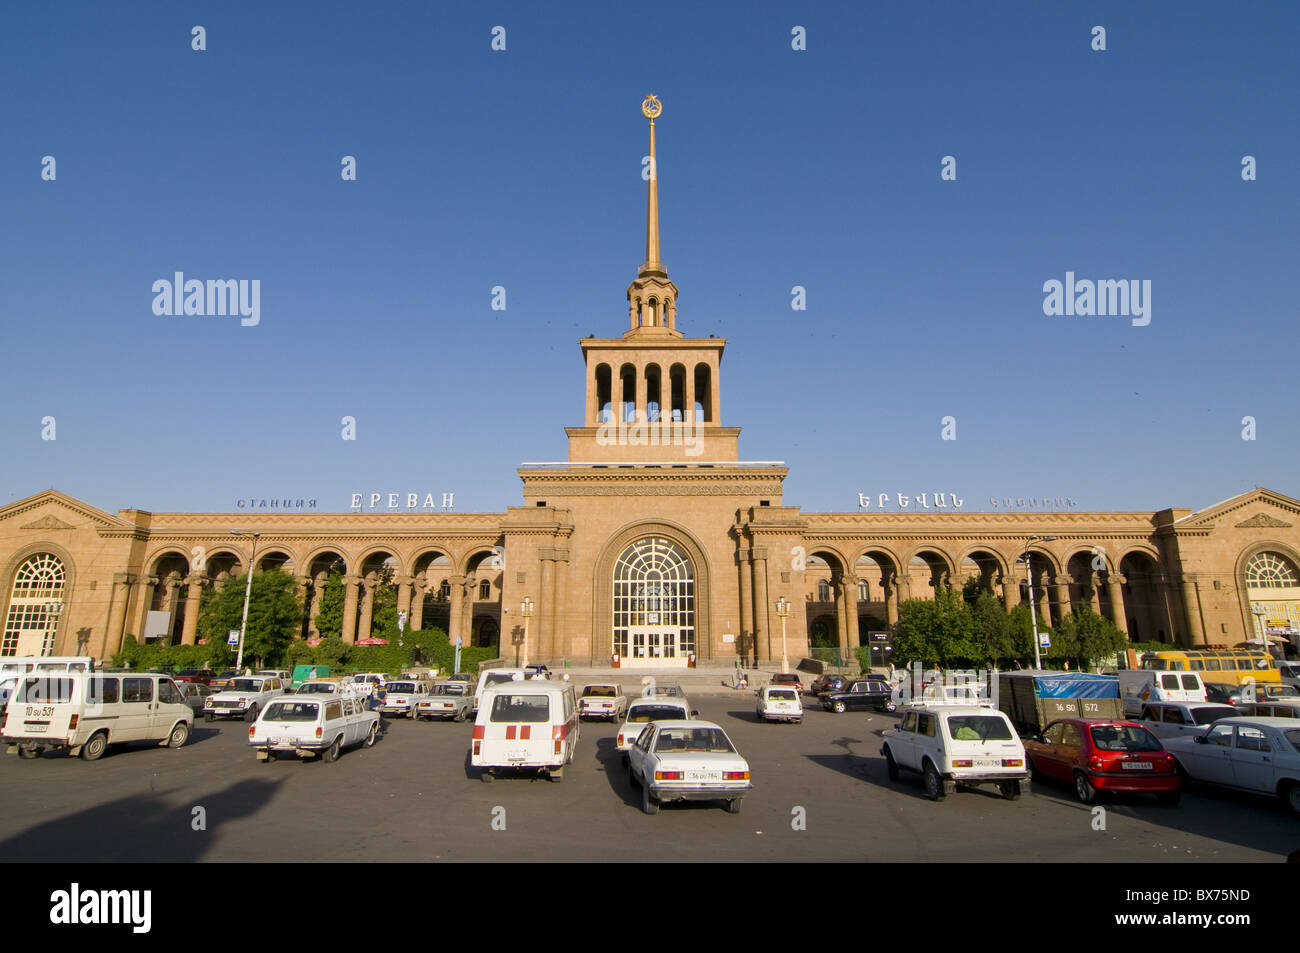 Erevan yerevan armenia asia hi-res stock photography and images - Alamy